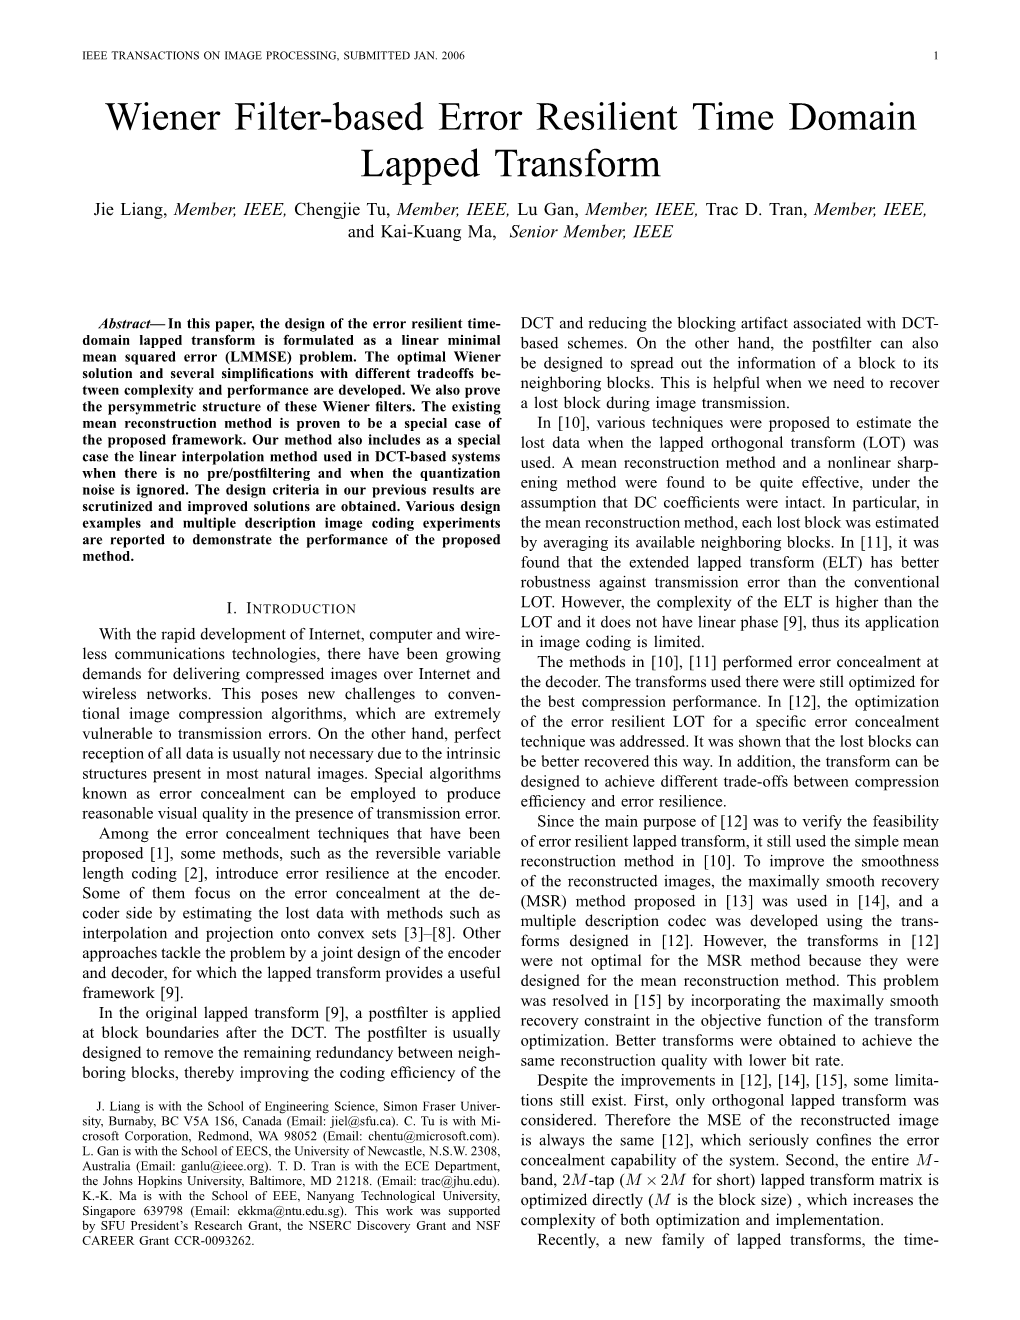 Wiener Filter-Based Error Resilient Time Domain Lapped Transform Jie Liang, Member, IEEE, Chengjie Tu, Member, IEEE, Lu Gan, Member, IEEE, Trac D